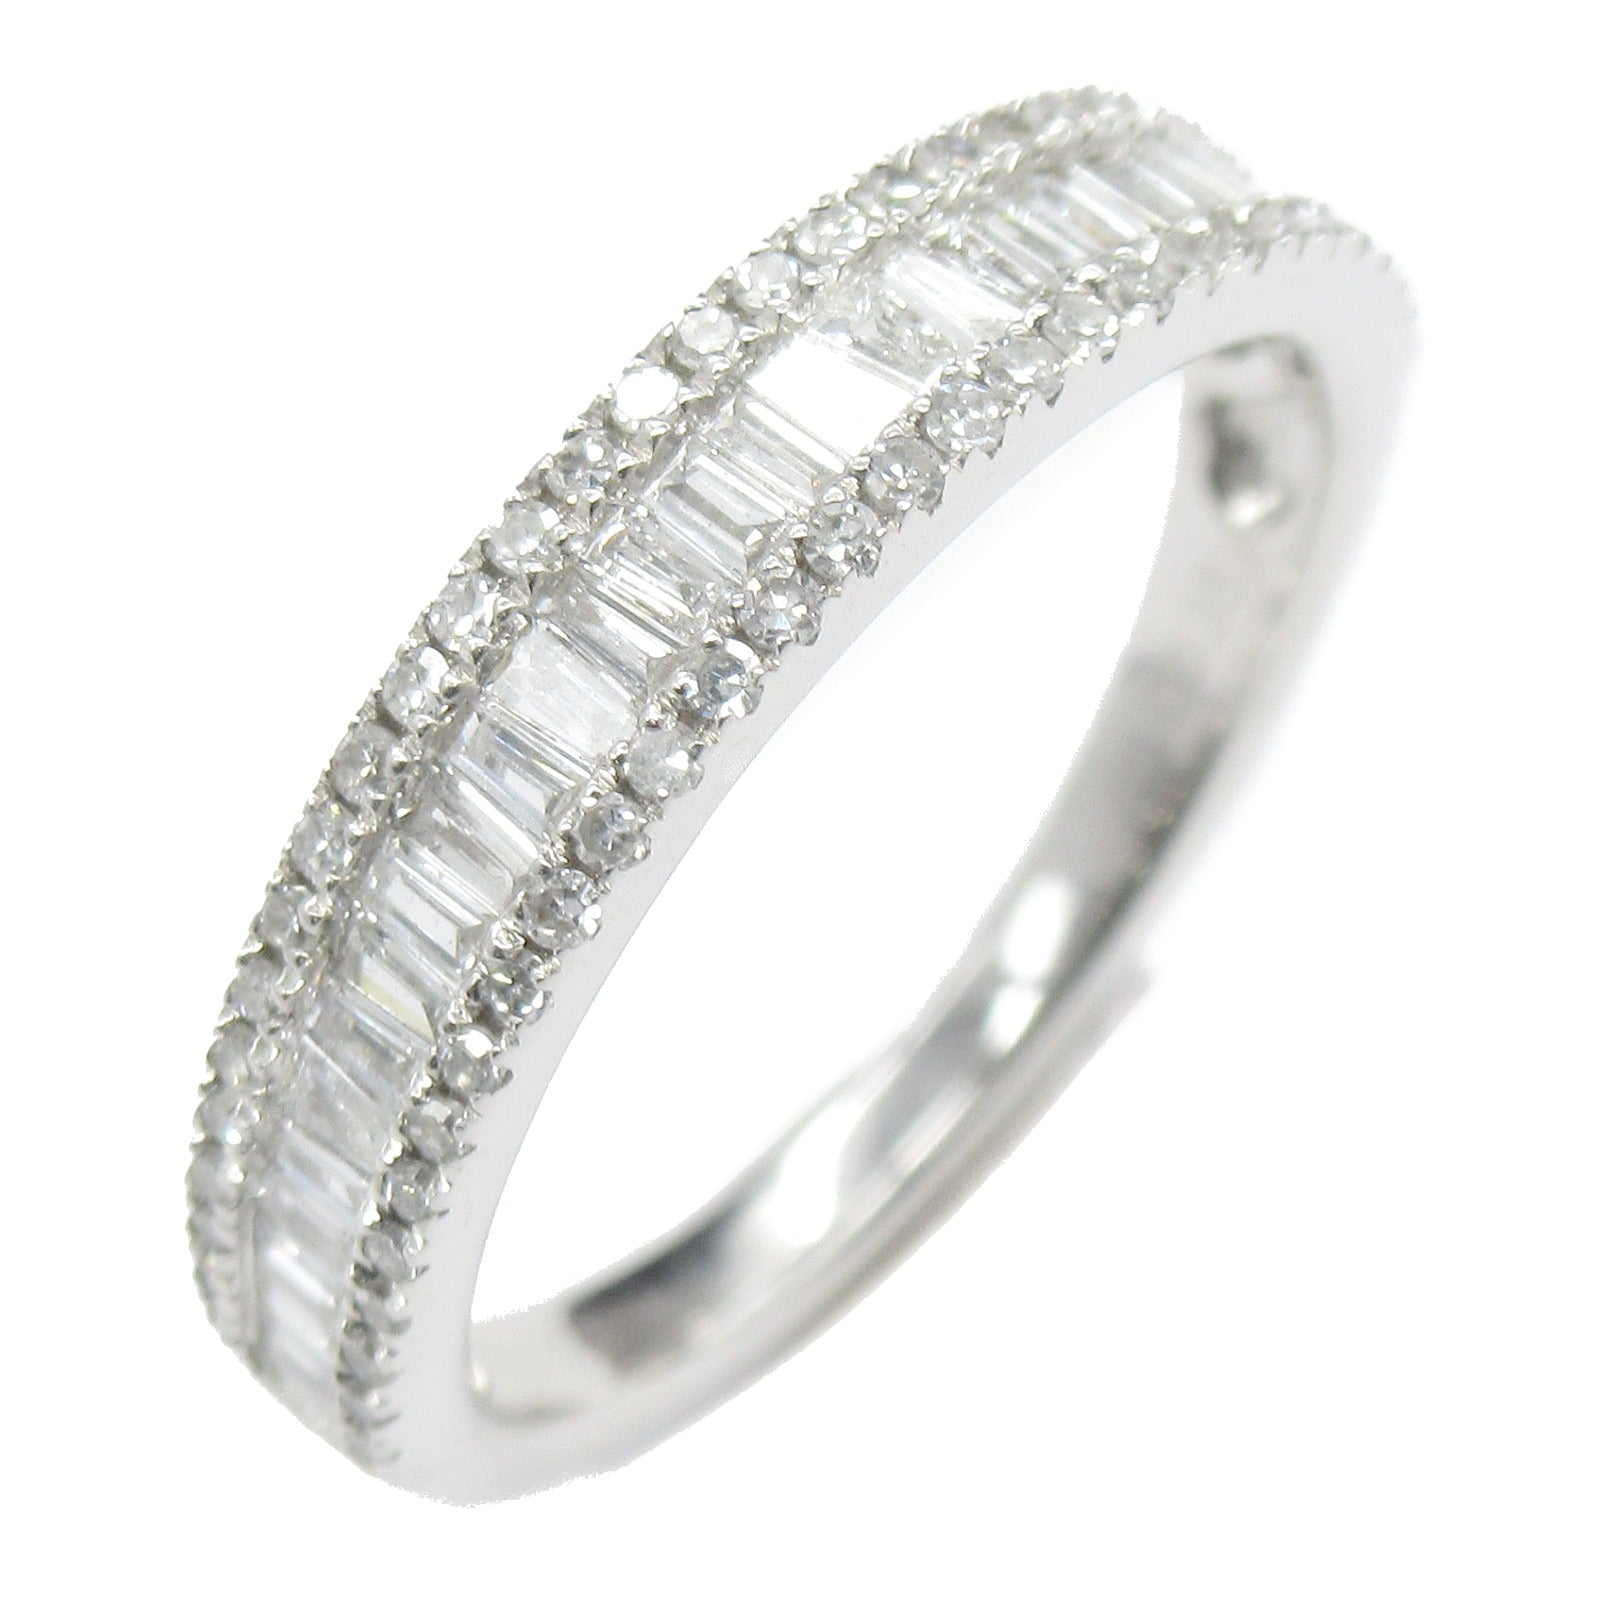 Jewelry Jewelry Diamond Ring Ring Ring Jewelry K18WG (White G) Diamond  Clear Diamond 2.1g